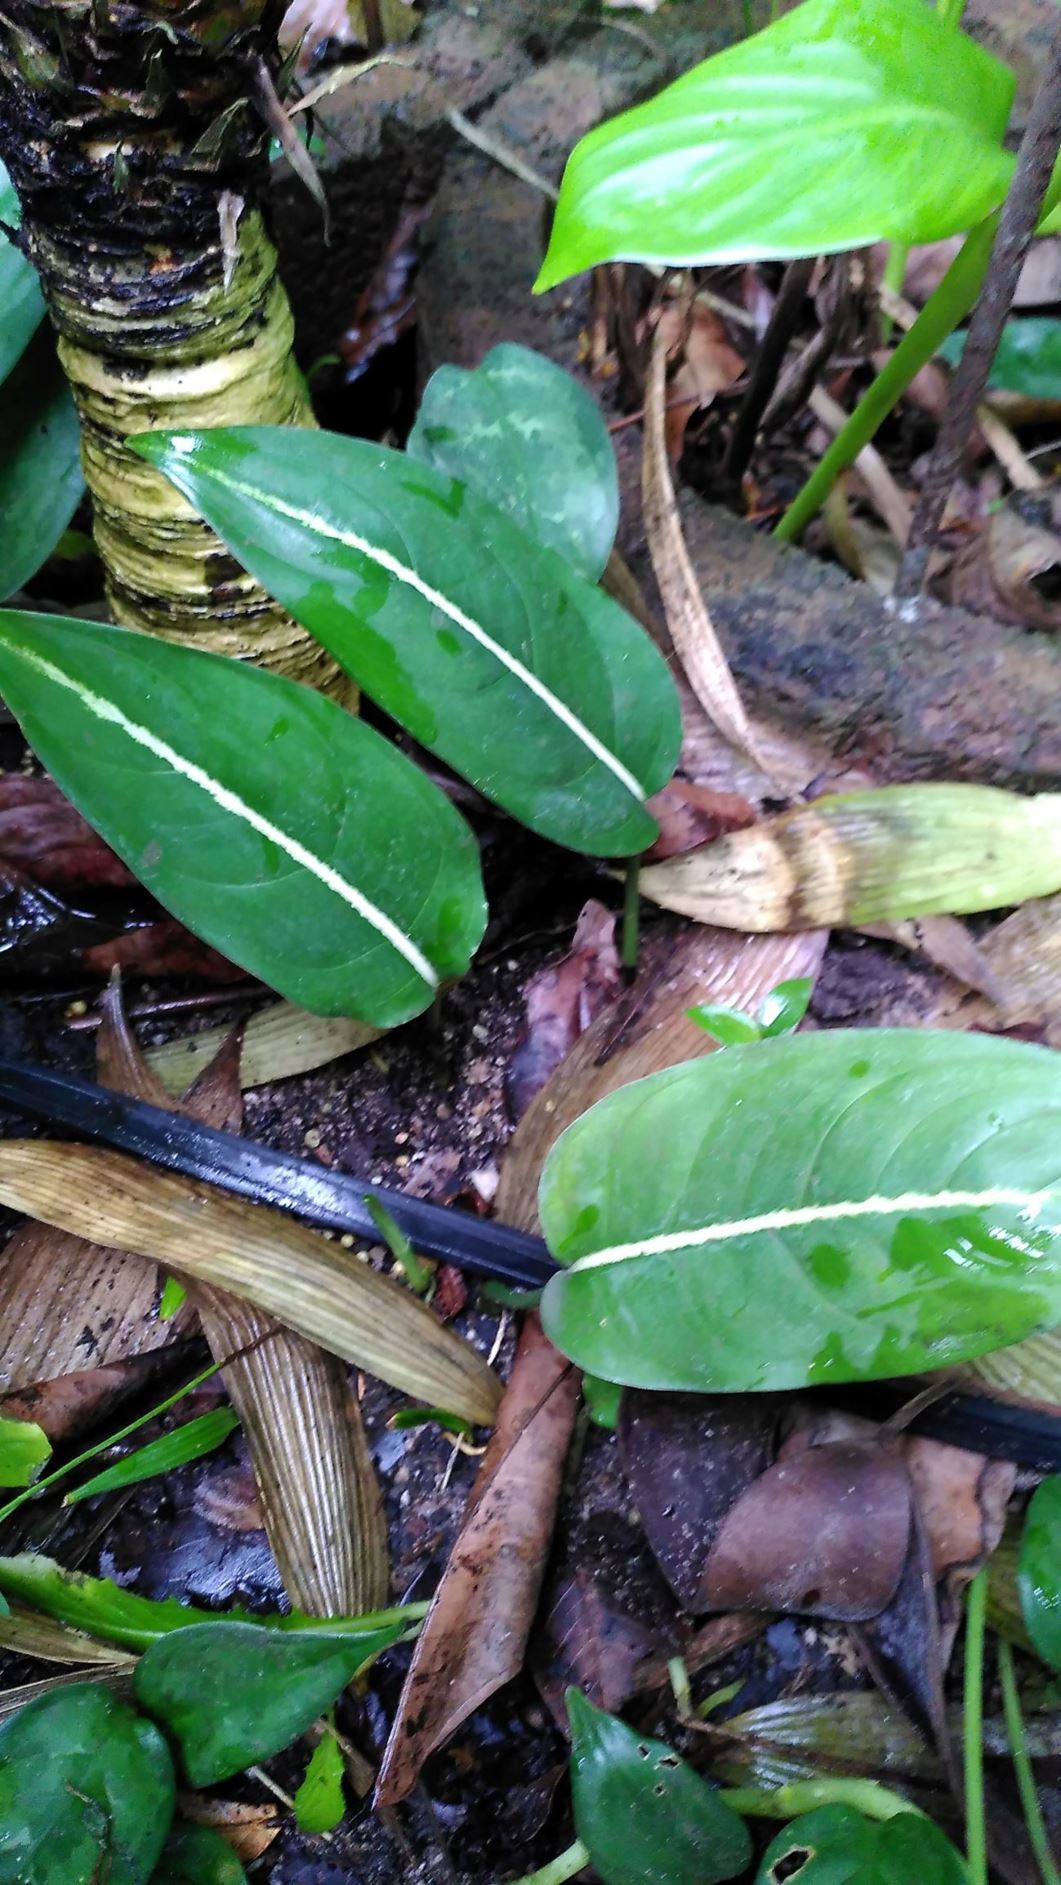 Aglaonema costatum - Spotted evergreen